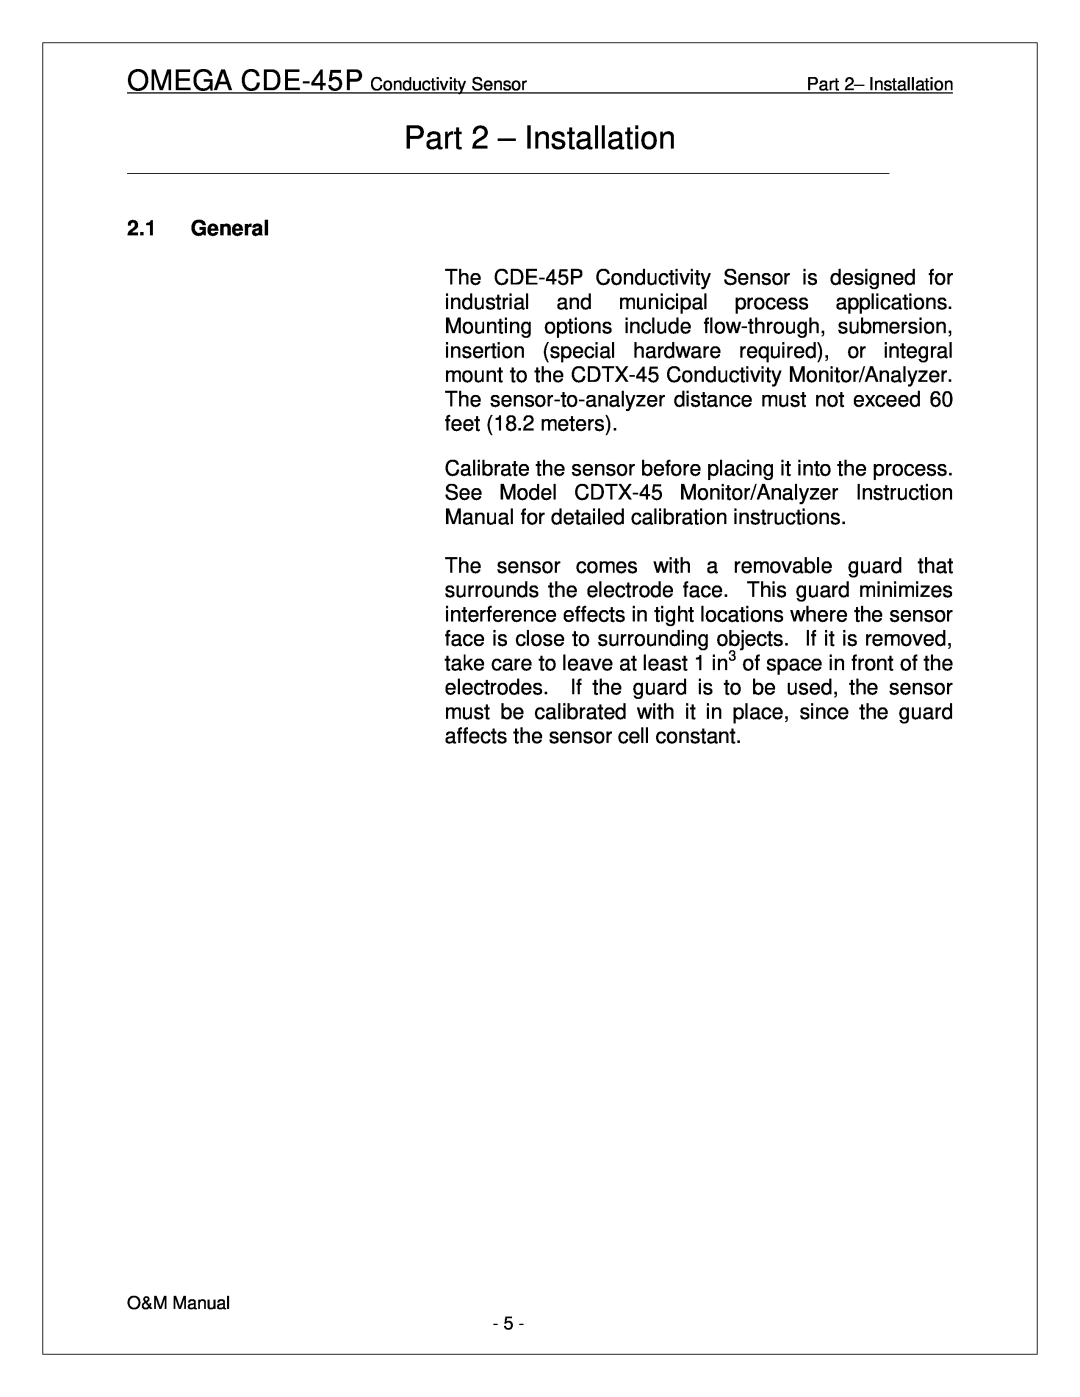 Omega Engineering CDE-45P manual Part 2 - Installation, General 